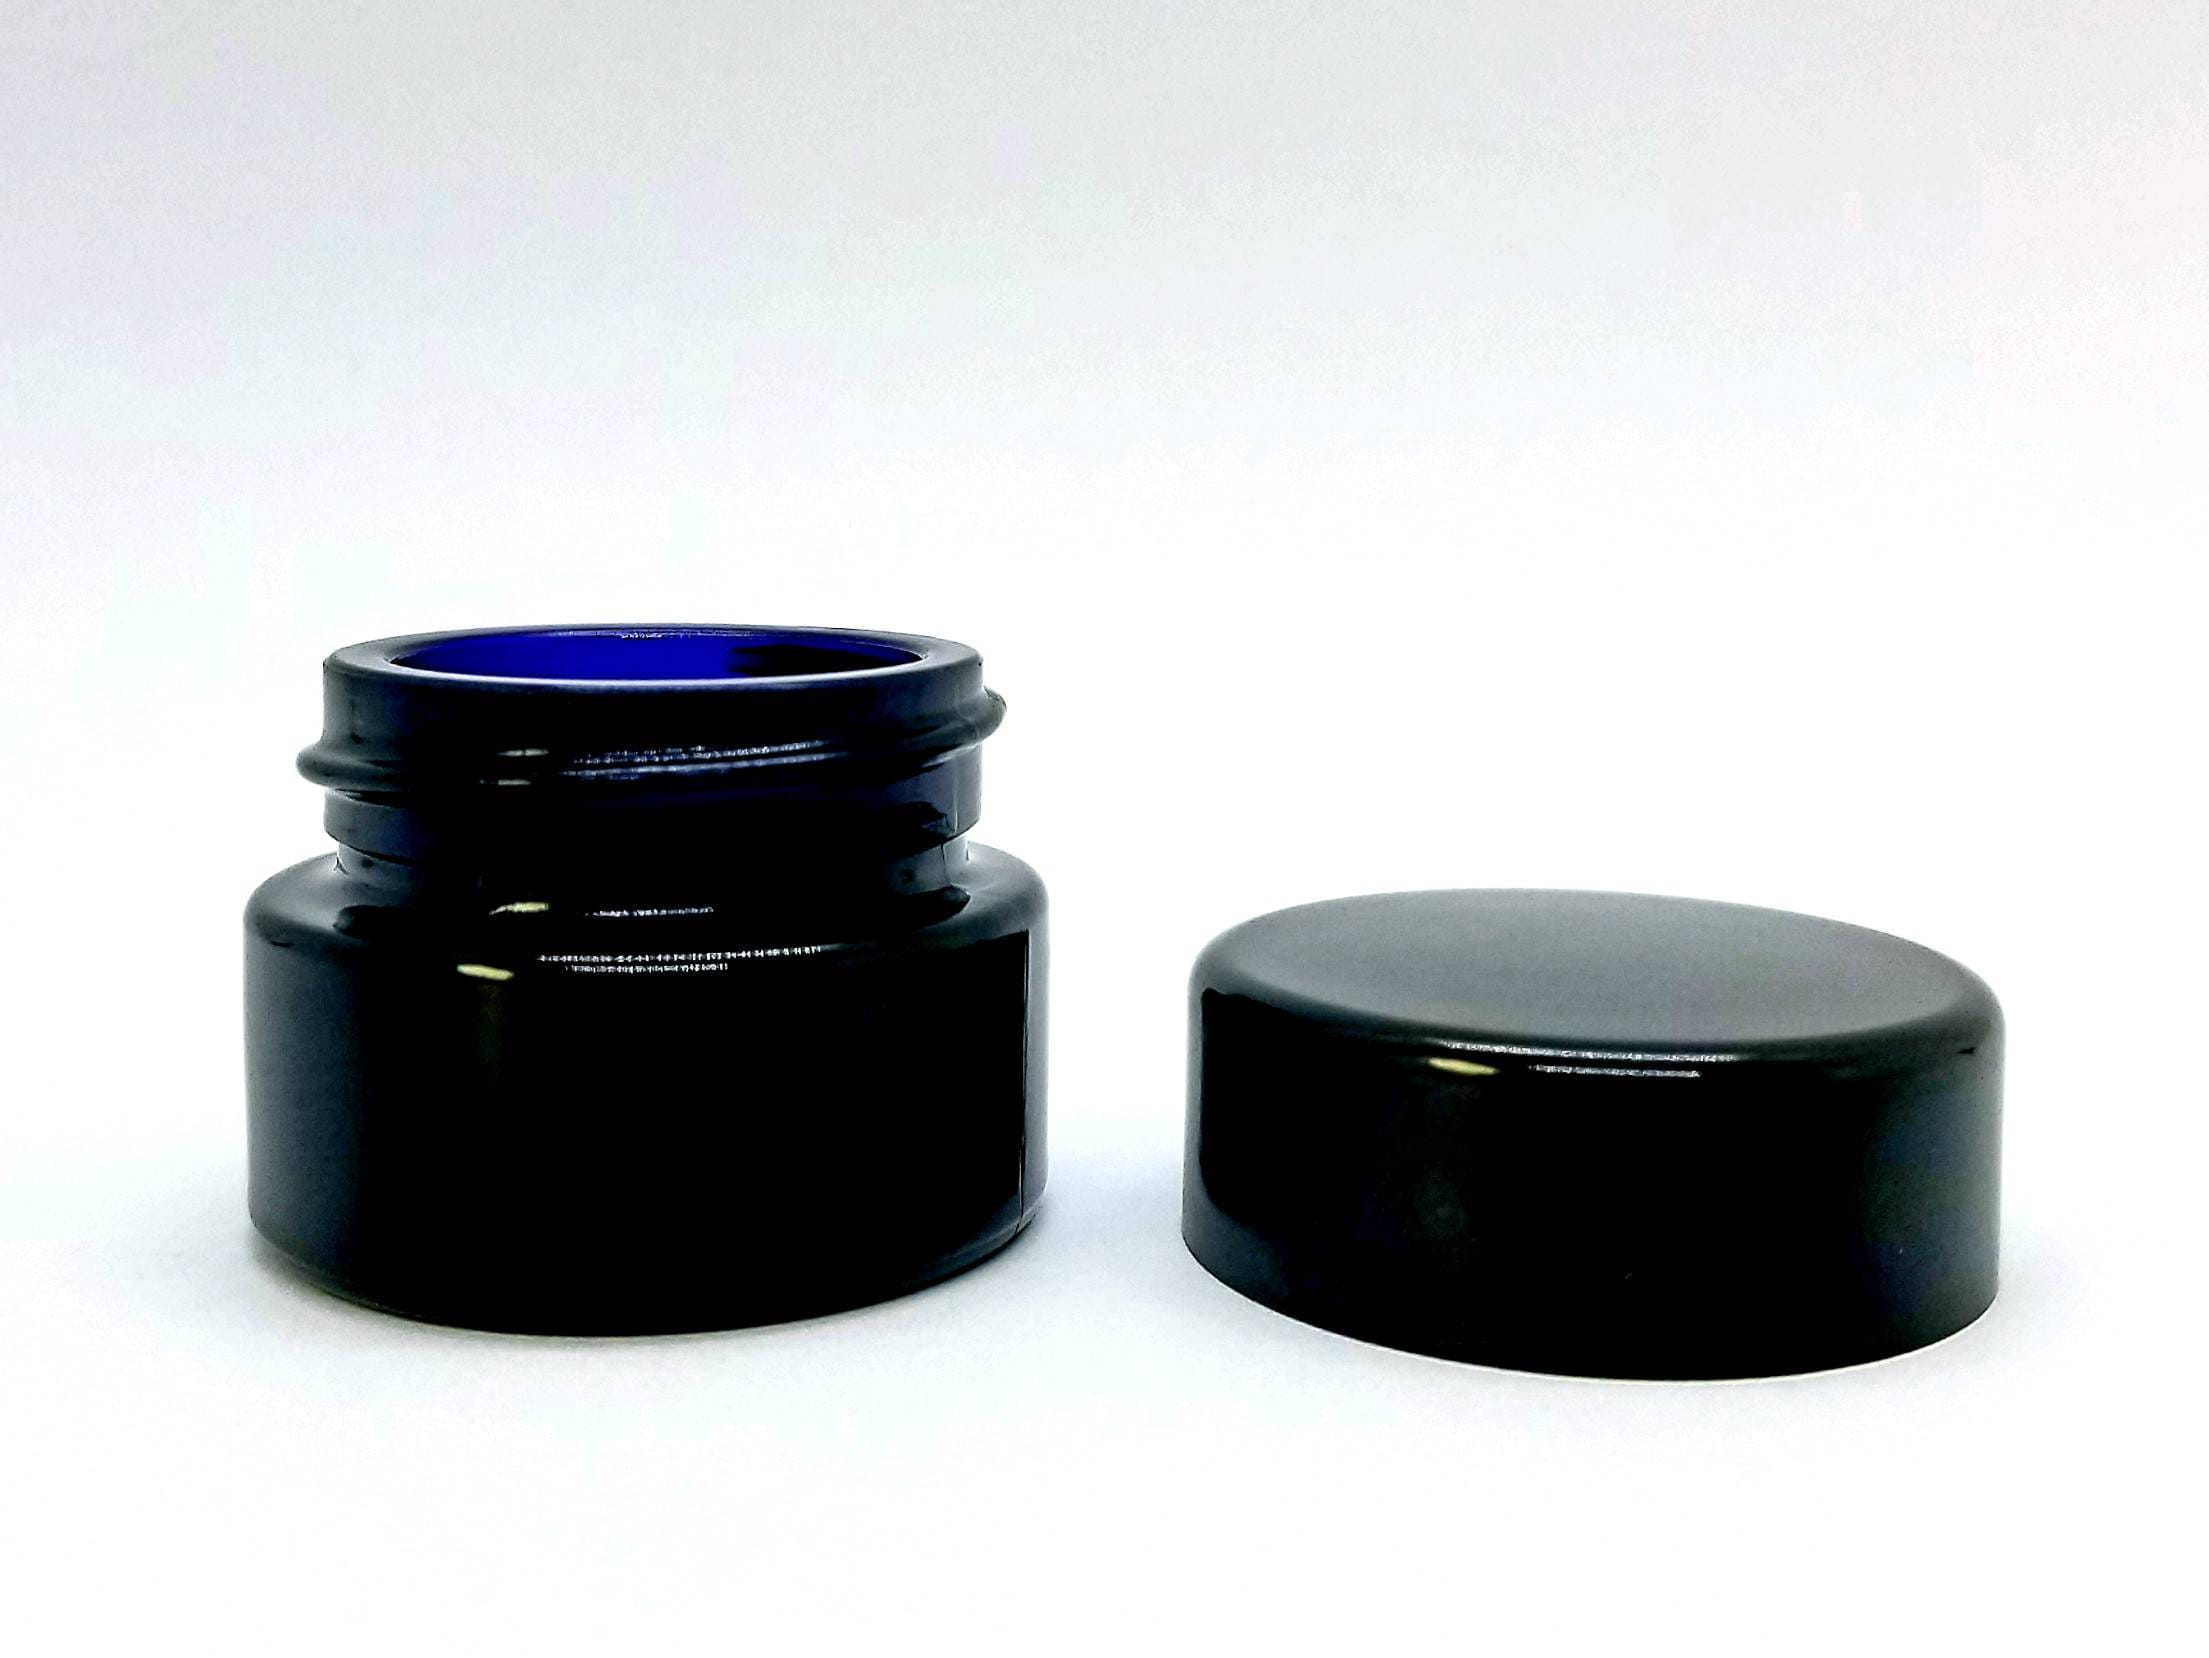 Infinity Jars 15 ml (.5 fl oz) Black Ultraviolet Glass Essential Oil Bottle w/ Euro Dropper Cap 3-Pack